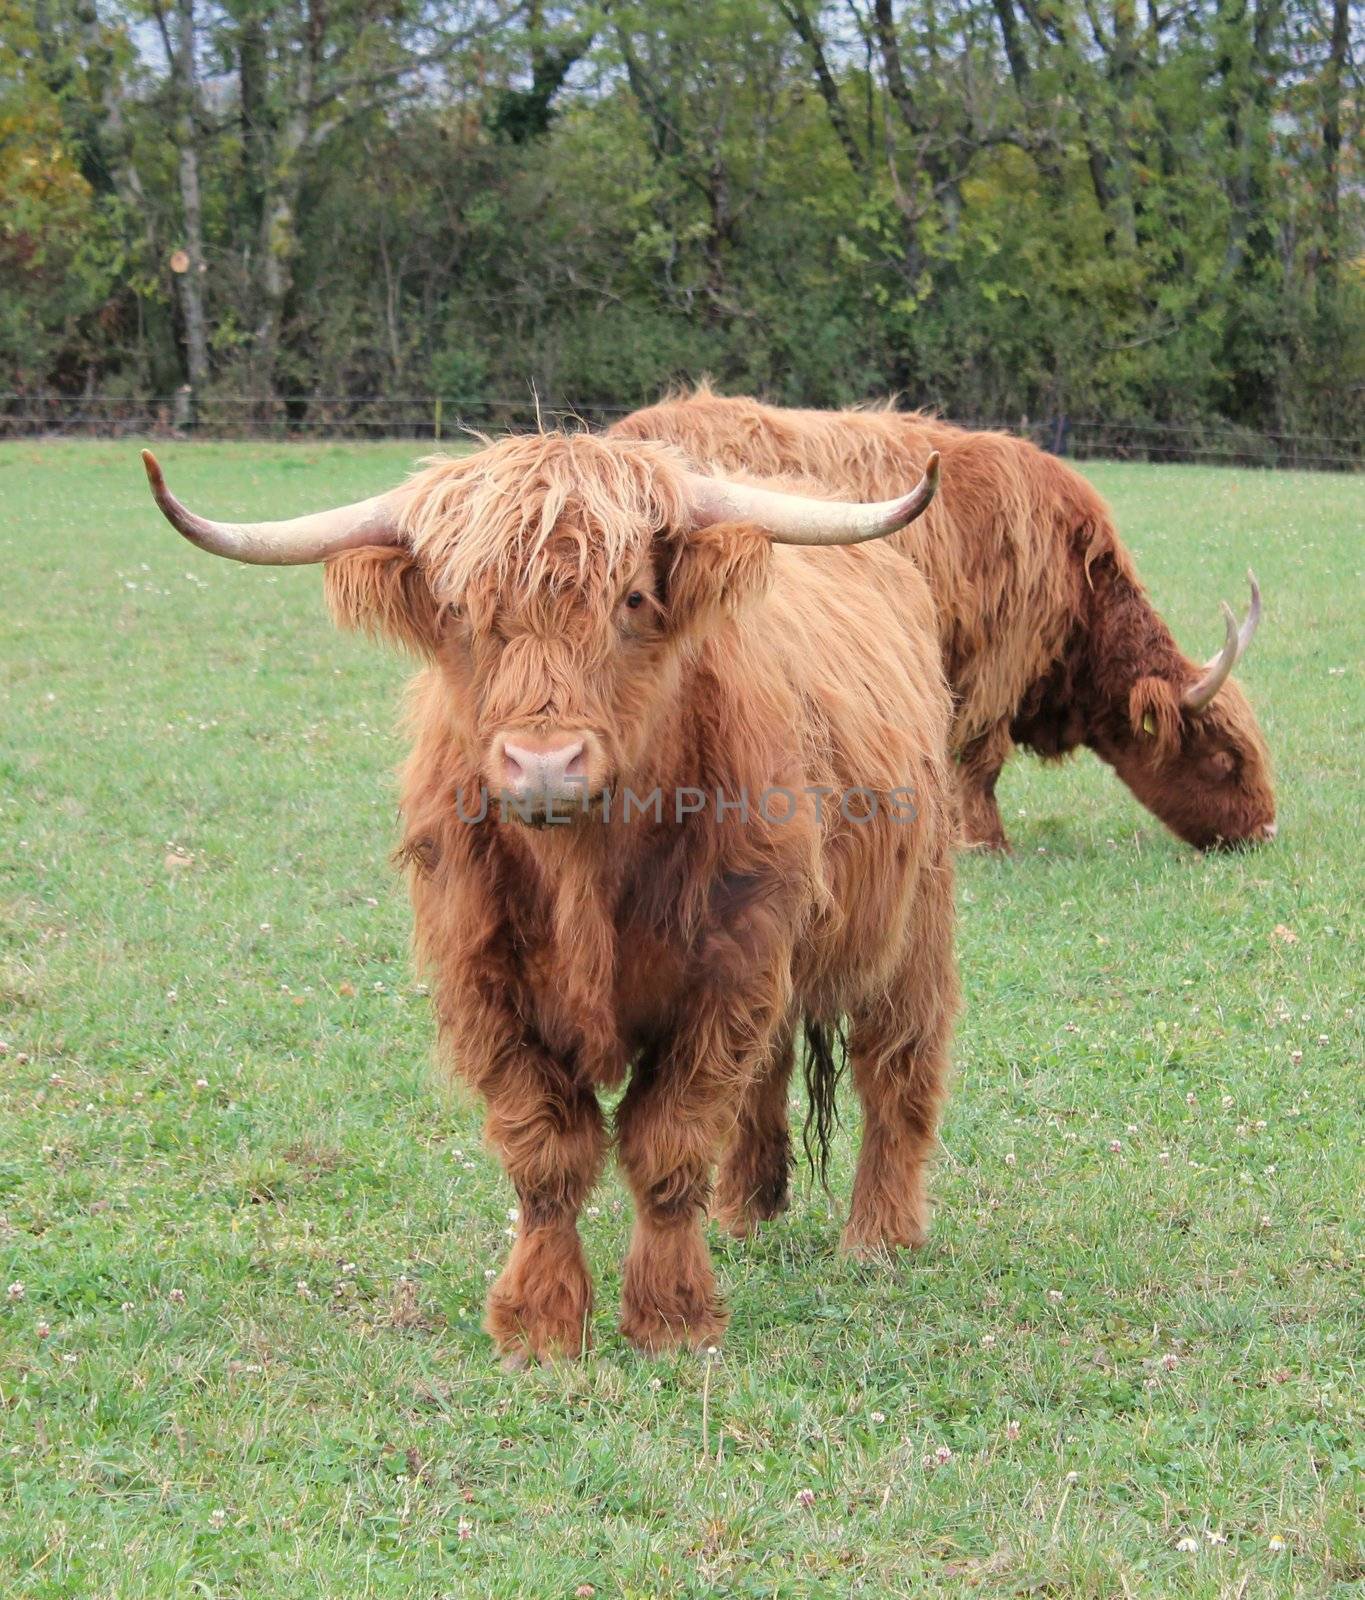 Scottish cows by Elenaphotos21